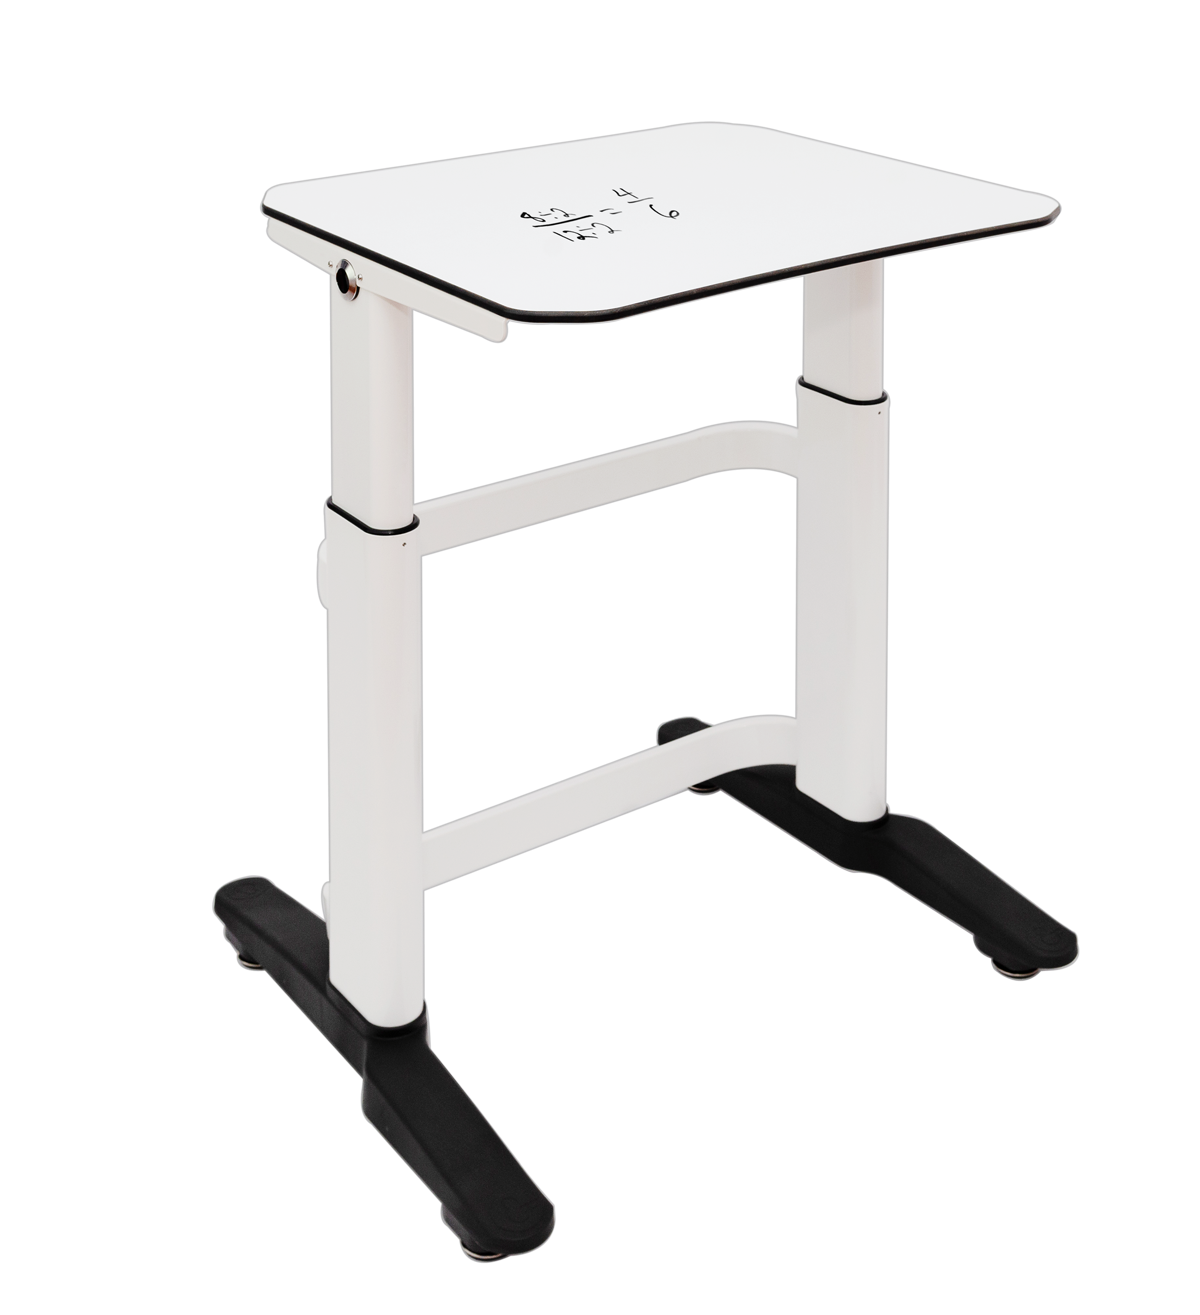 Amperstand-Small Desk-Writable-Levellers